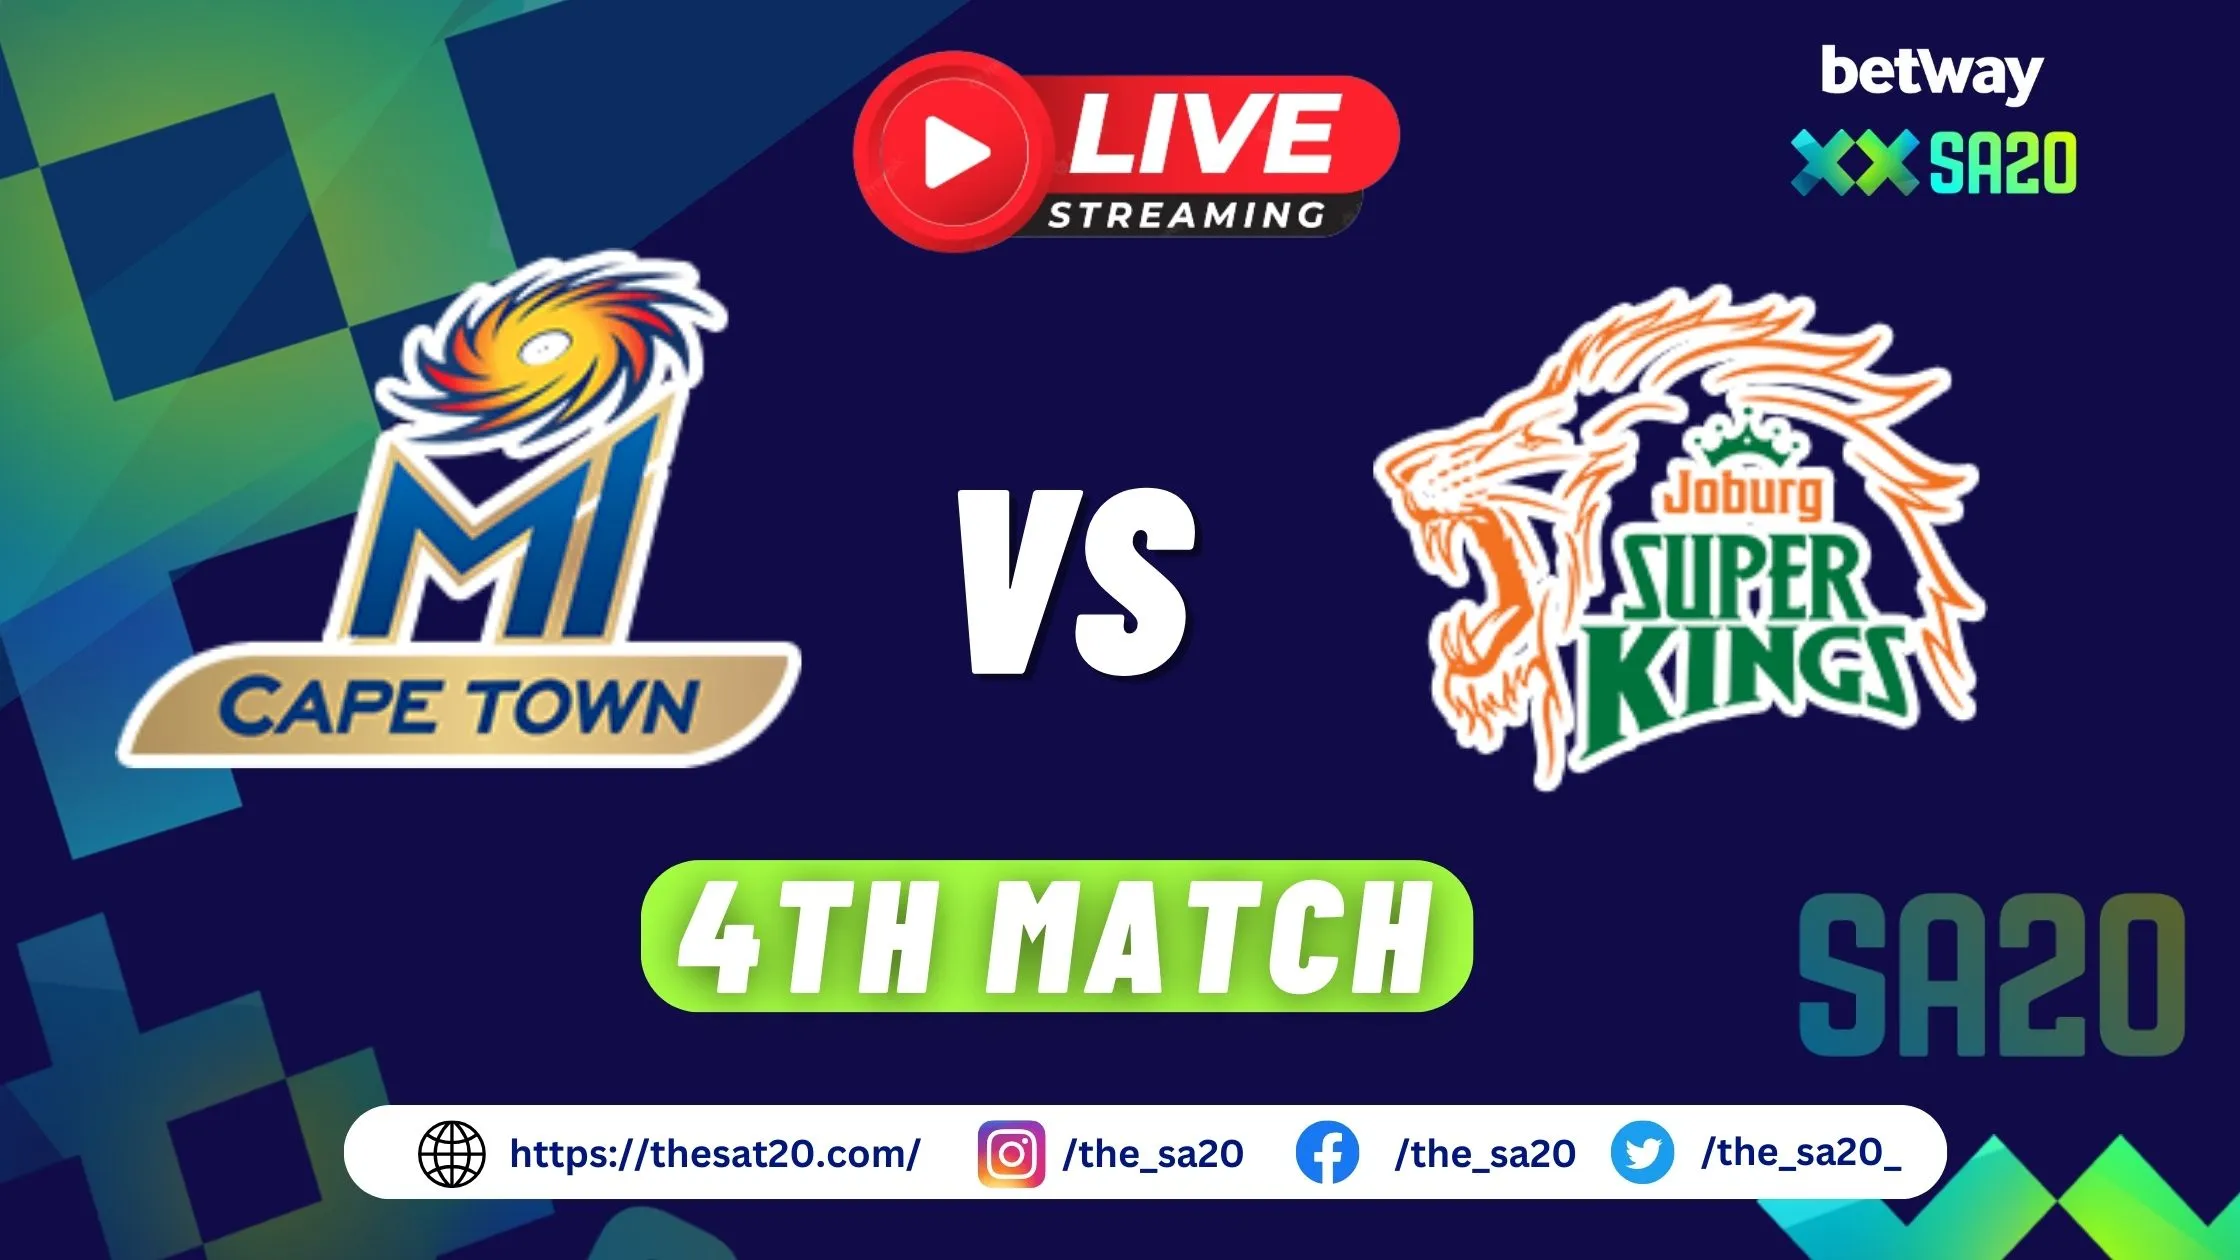 Joburg-Super-Kings-vs-MI-Cape-Town-Live-Streaming-4th-Match